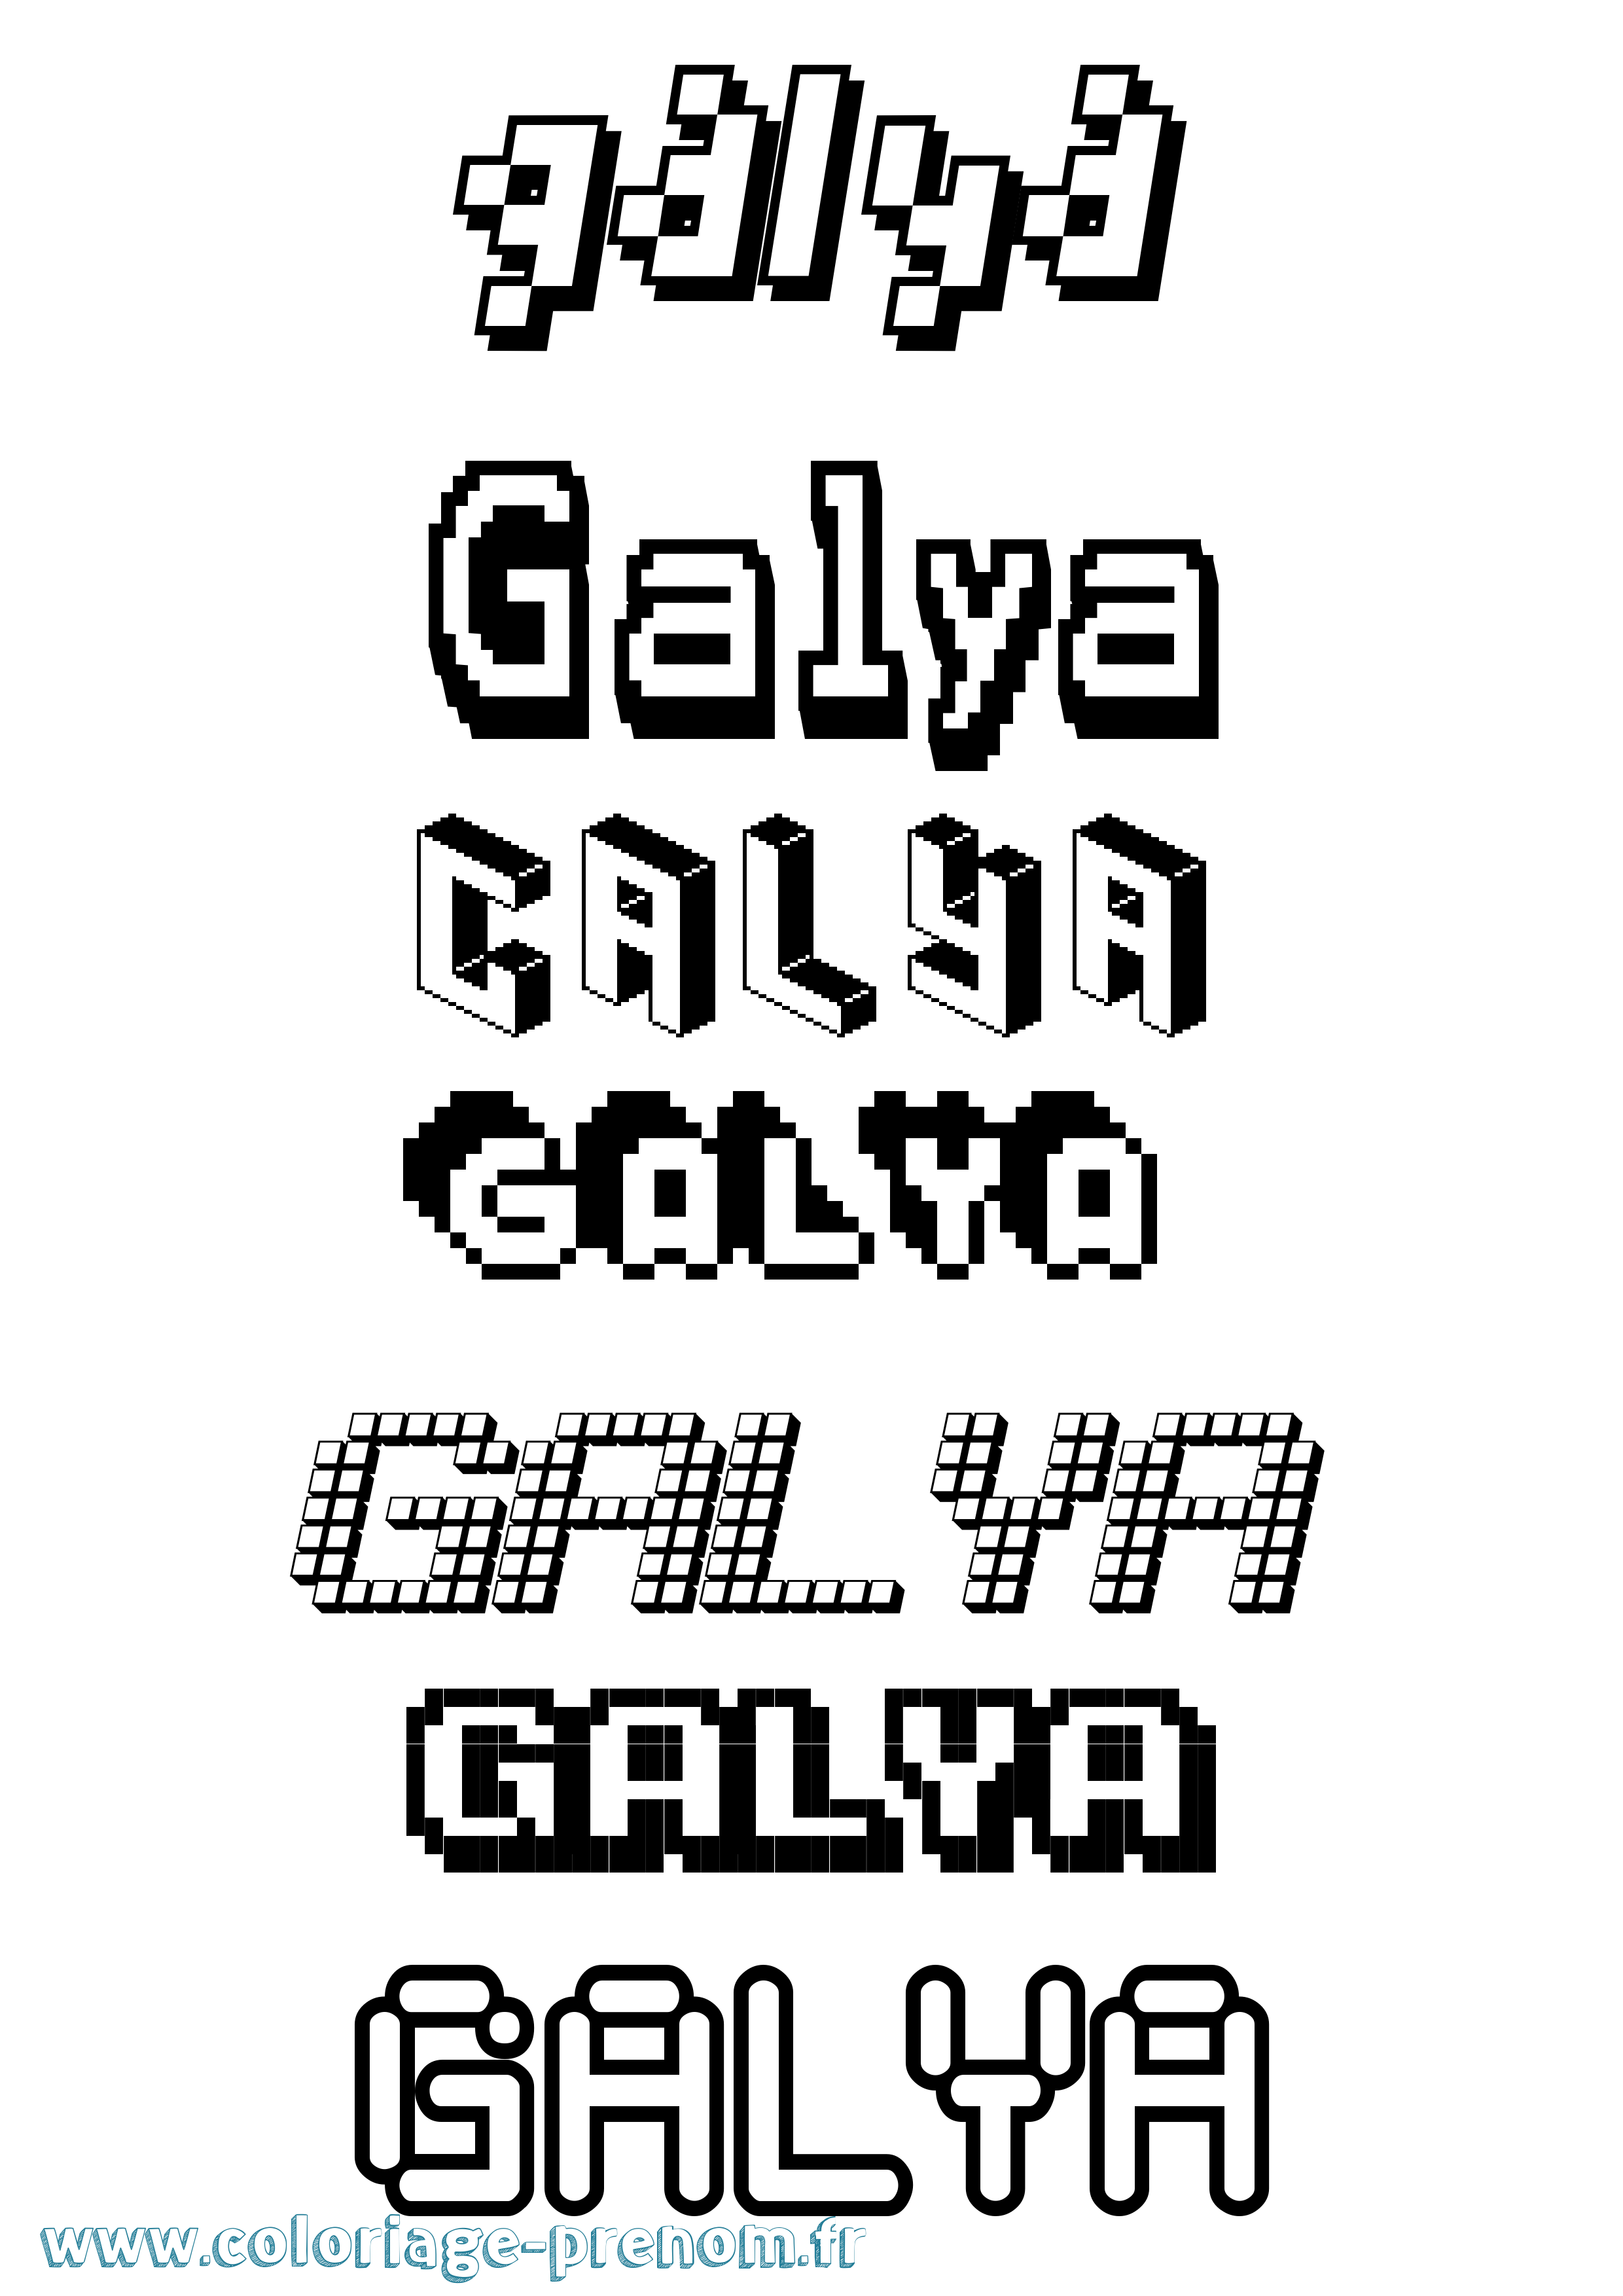 Coloriage prénom Galya Pixel